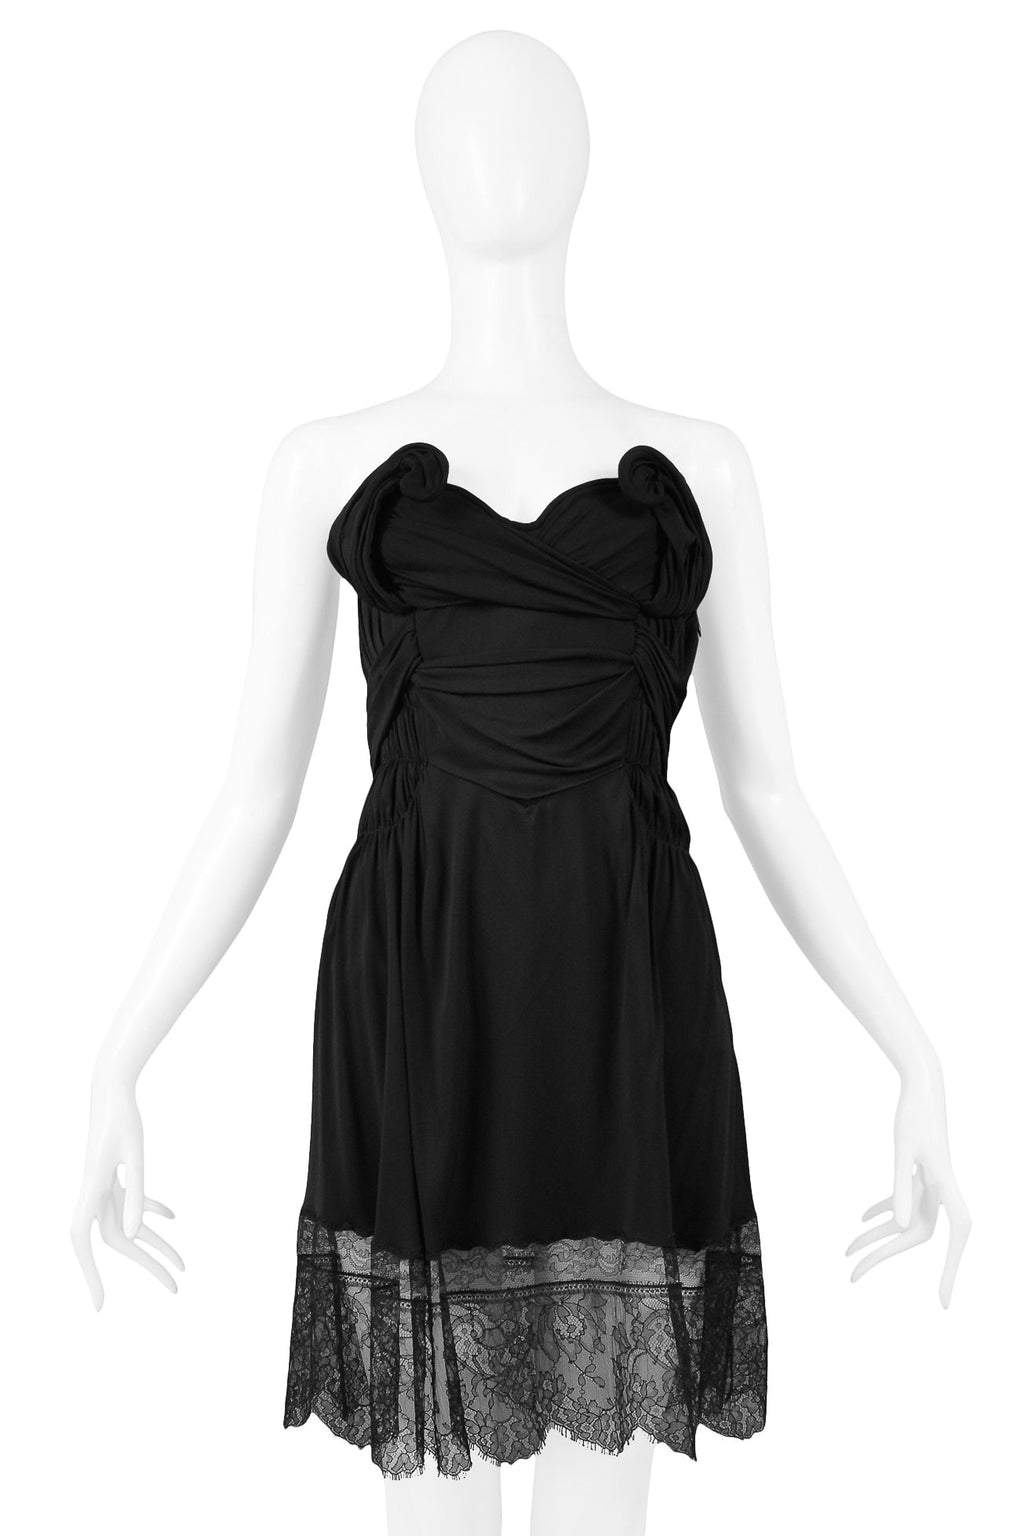 Incredible Spring 2007 John Galliano Strapless Black Lace Dress w